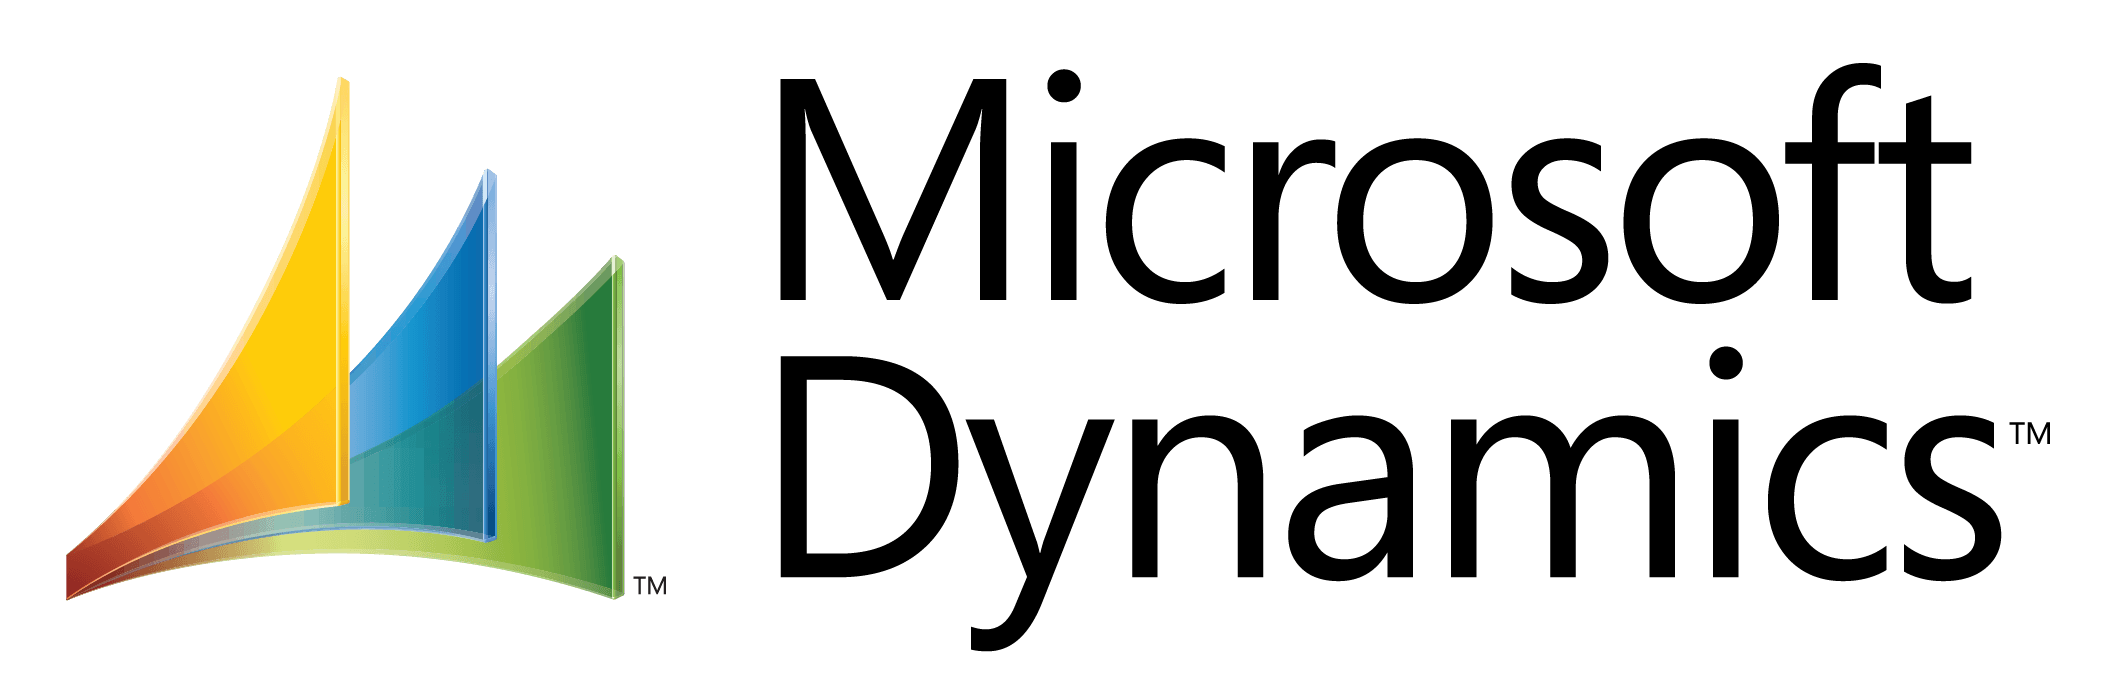 Dynamics CRM Logo - Microsoft Dynamics Crm Transparent Logo Png Image